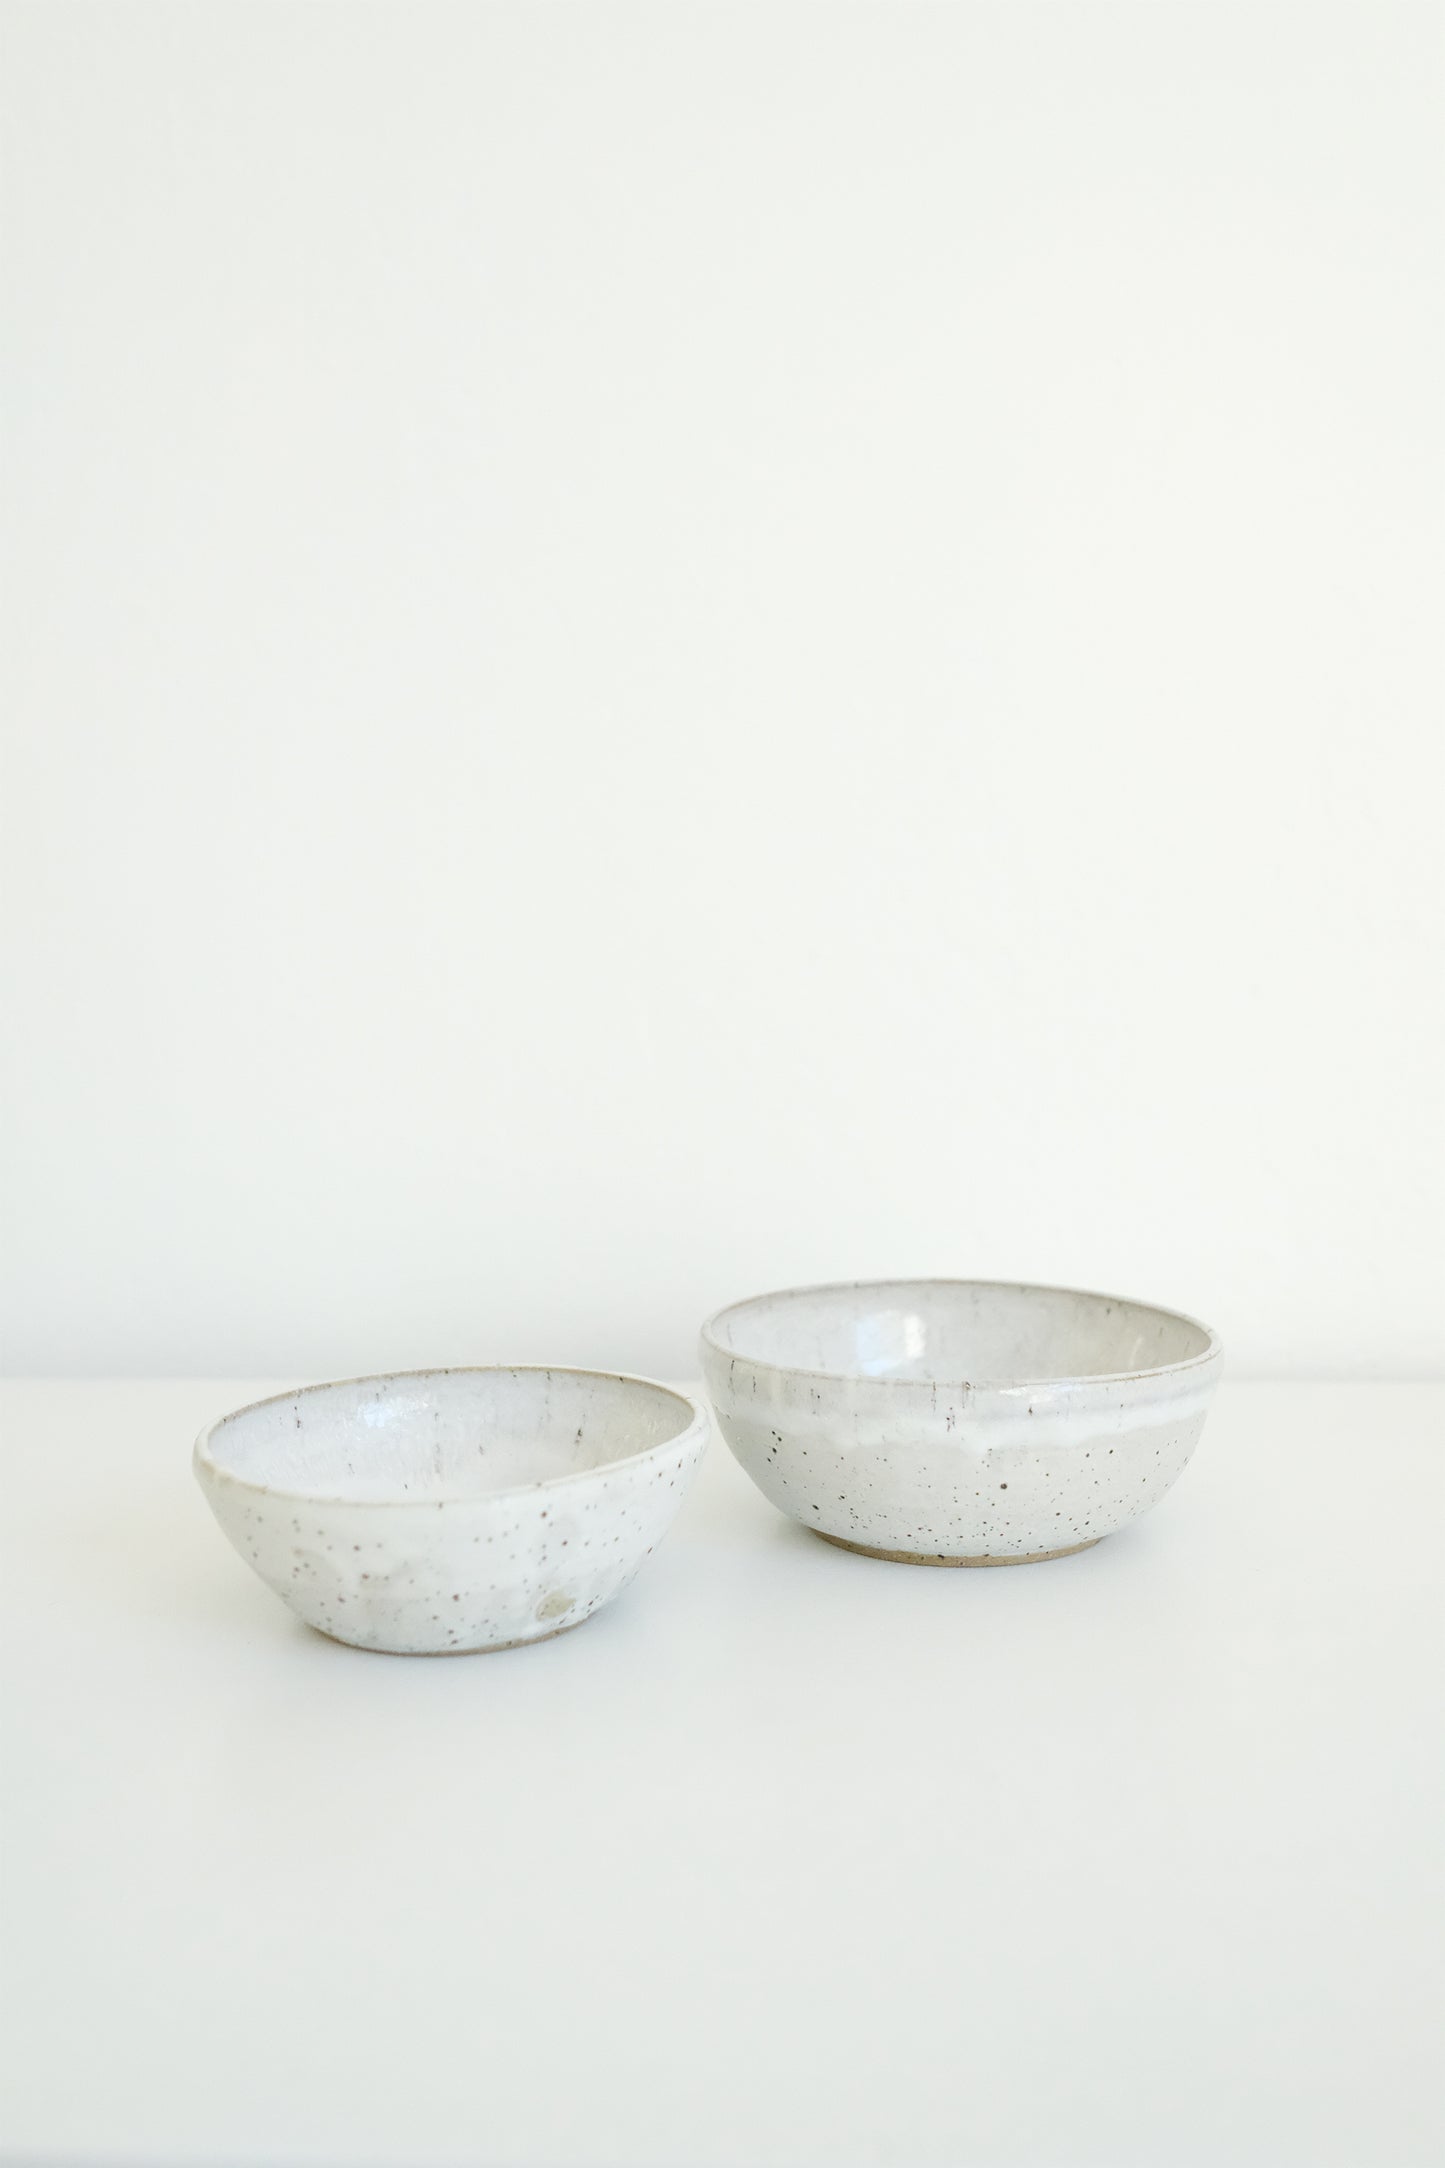 nesting bowls #2 - set of 2